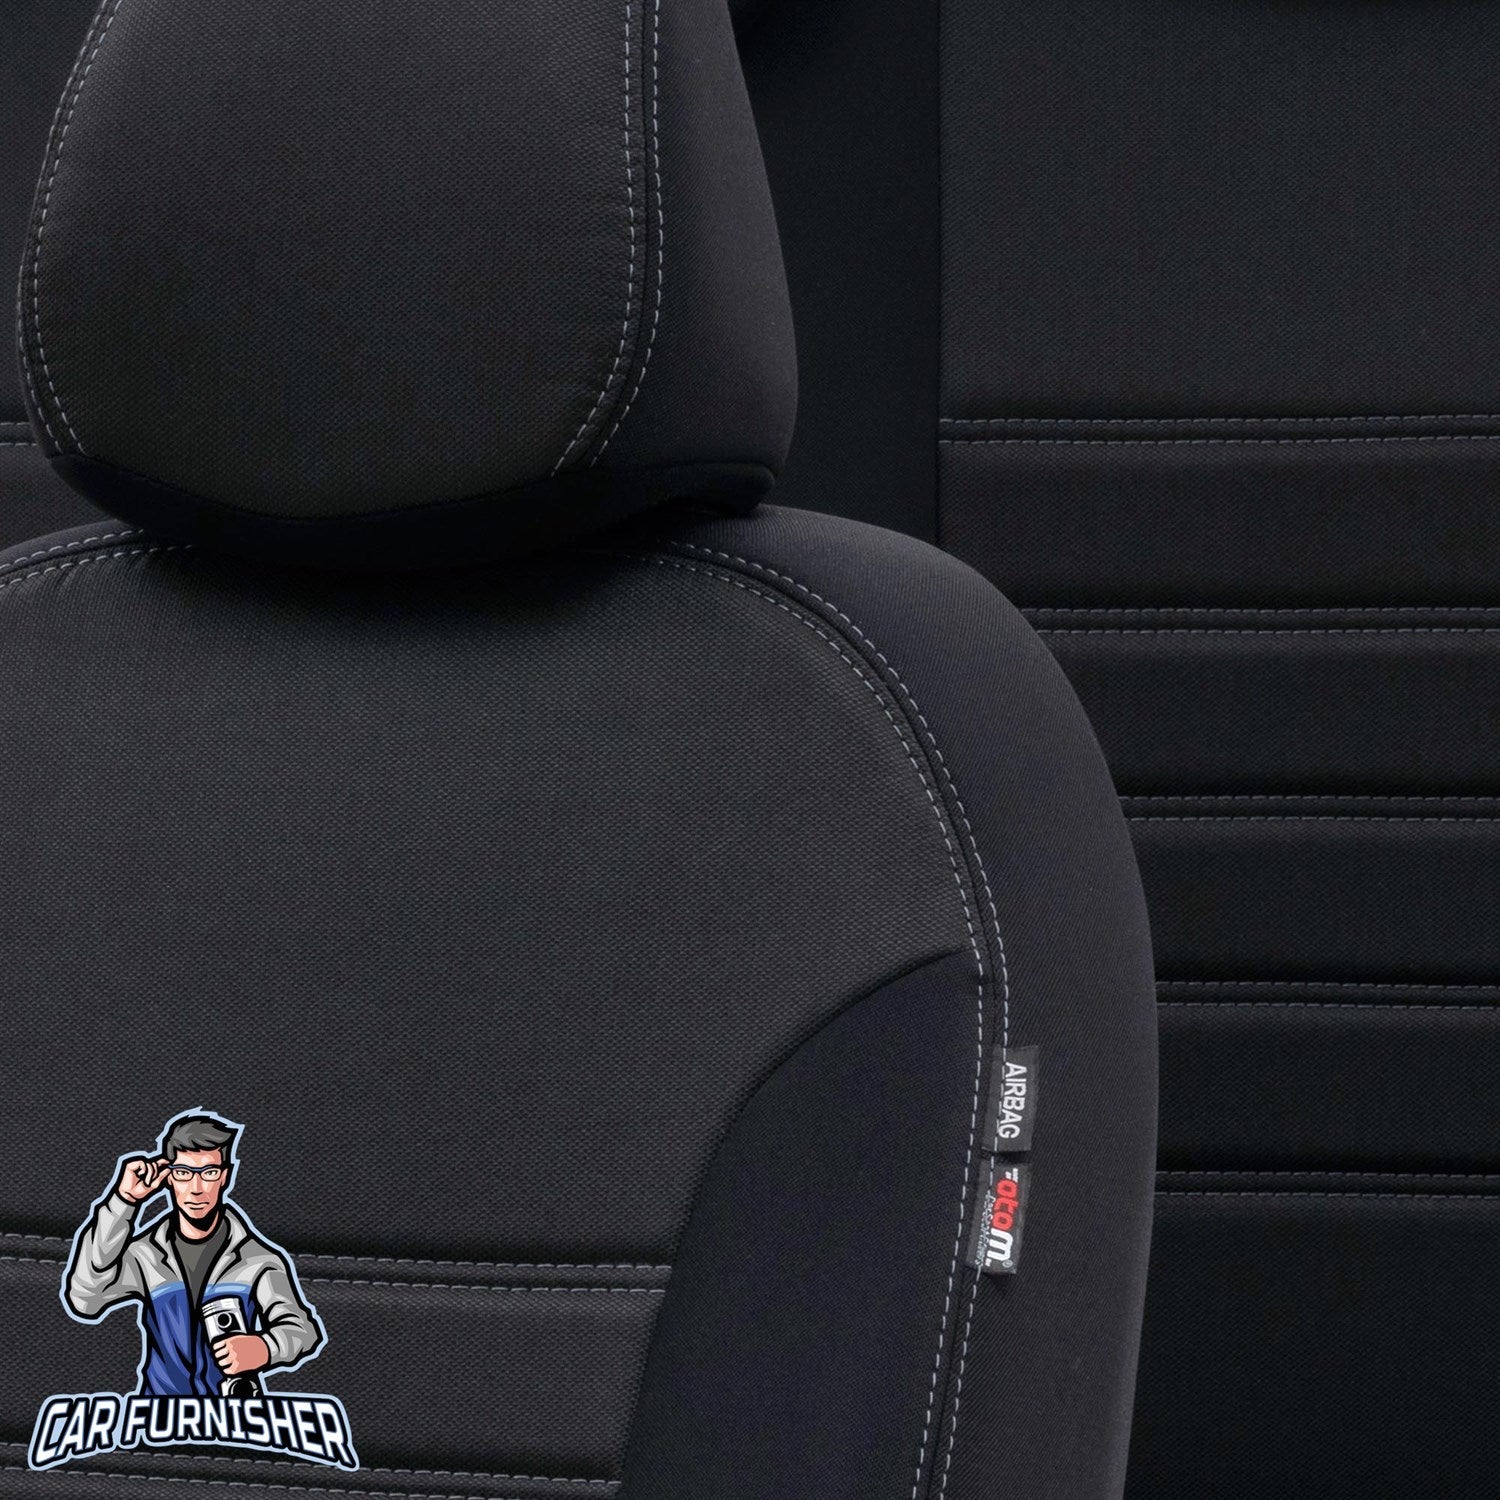 Renault Fluence Seat Covers Original Jacquard Design Black Jacquard Fabric